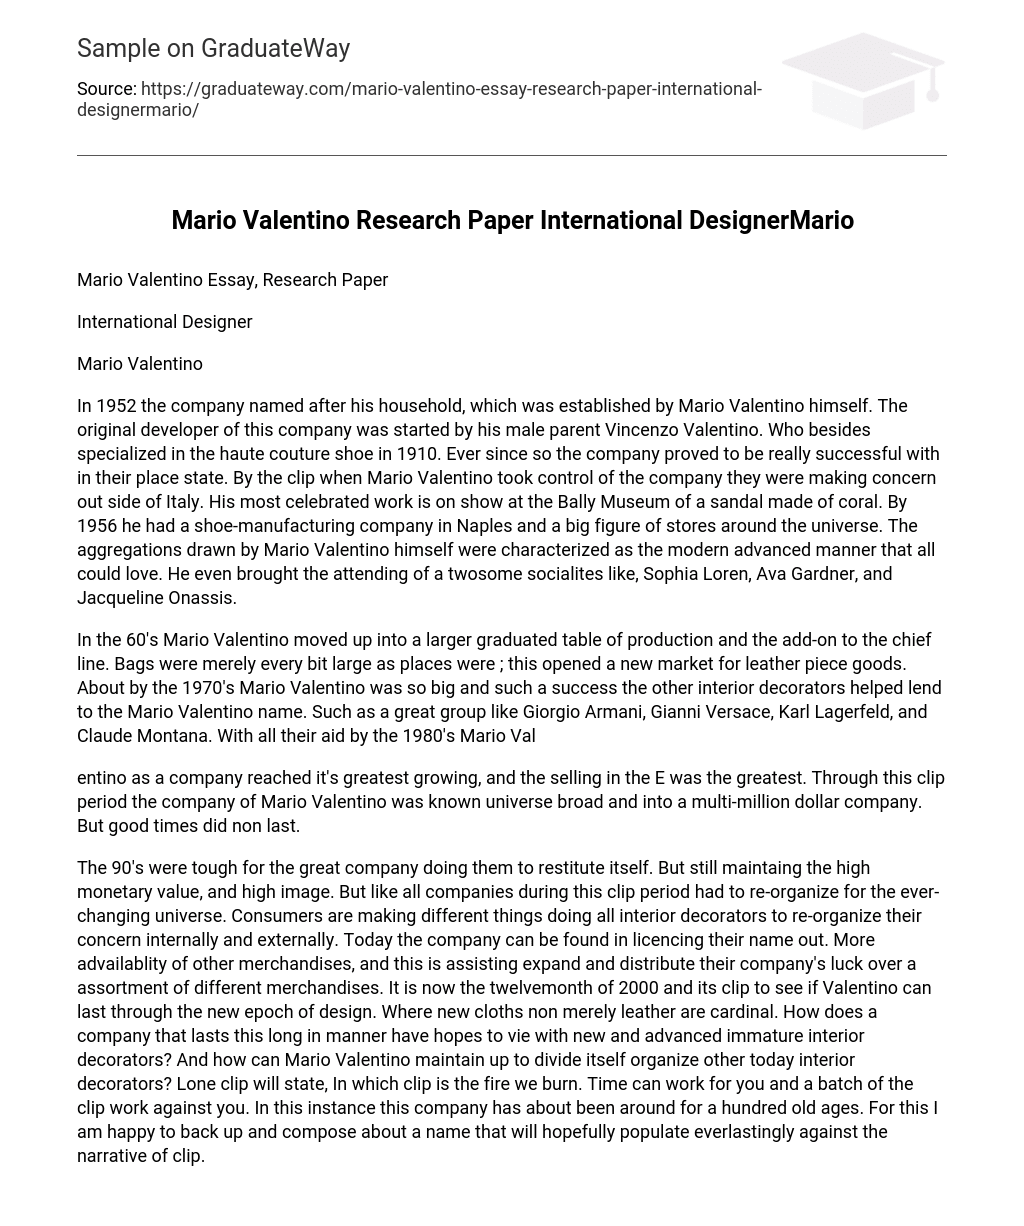 Mario Valentino Research Paper International DesignerMario